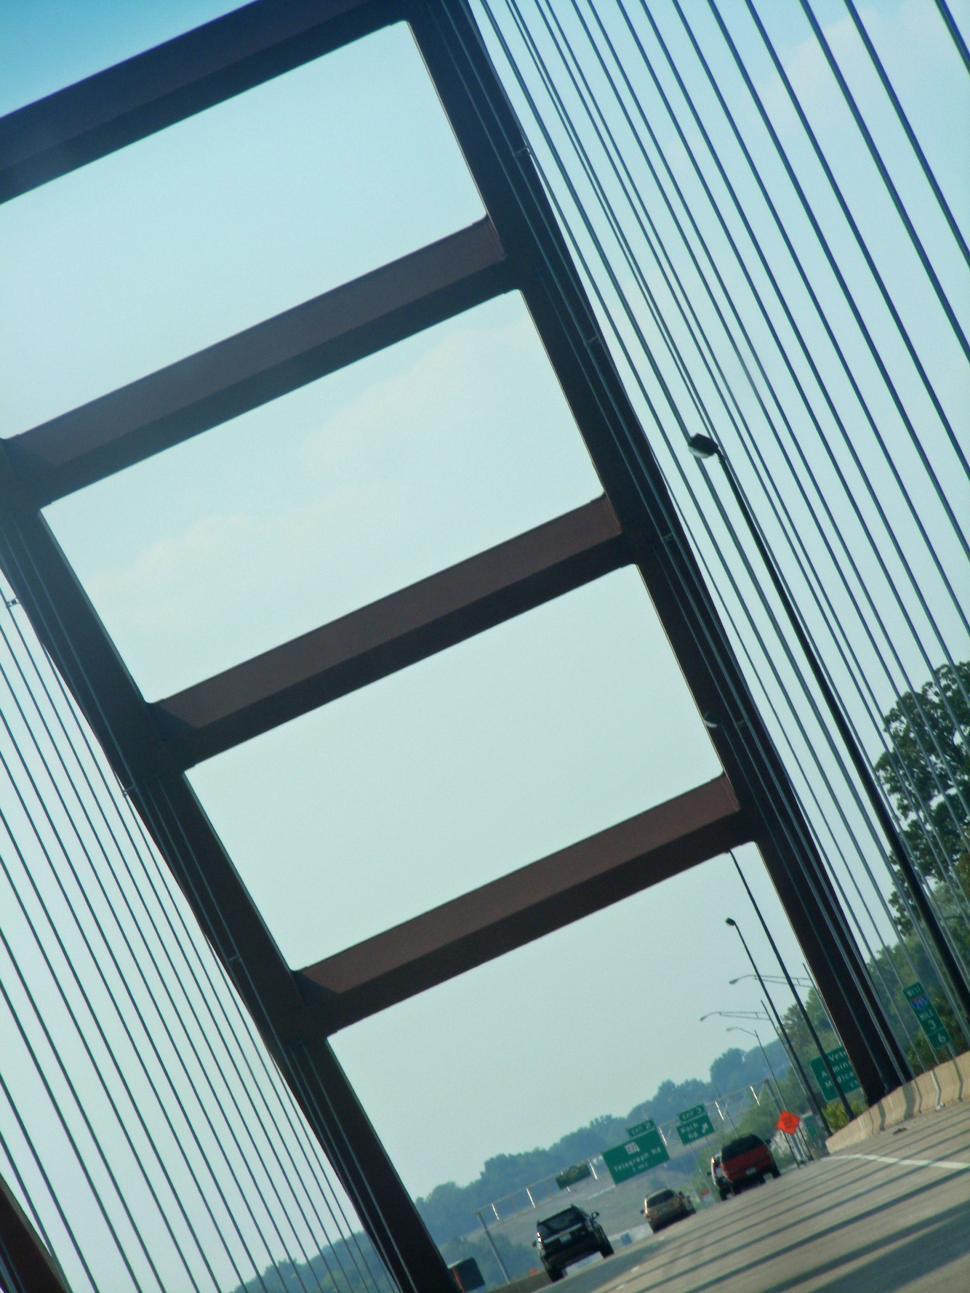 Free Image of Mississippi Bridge 